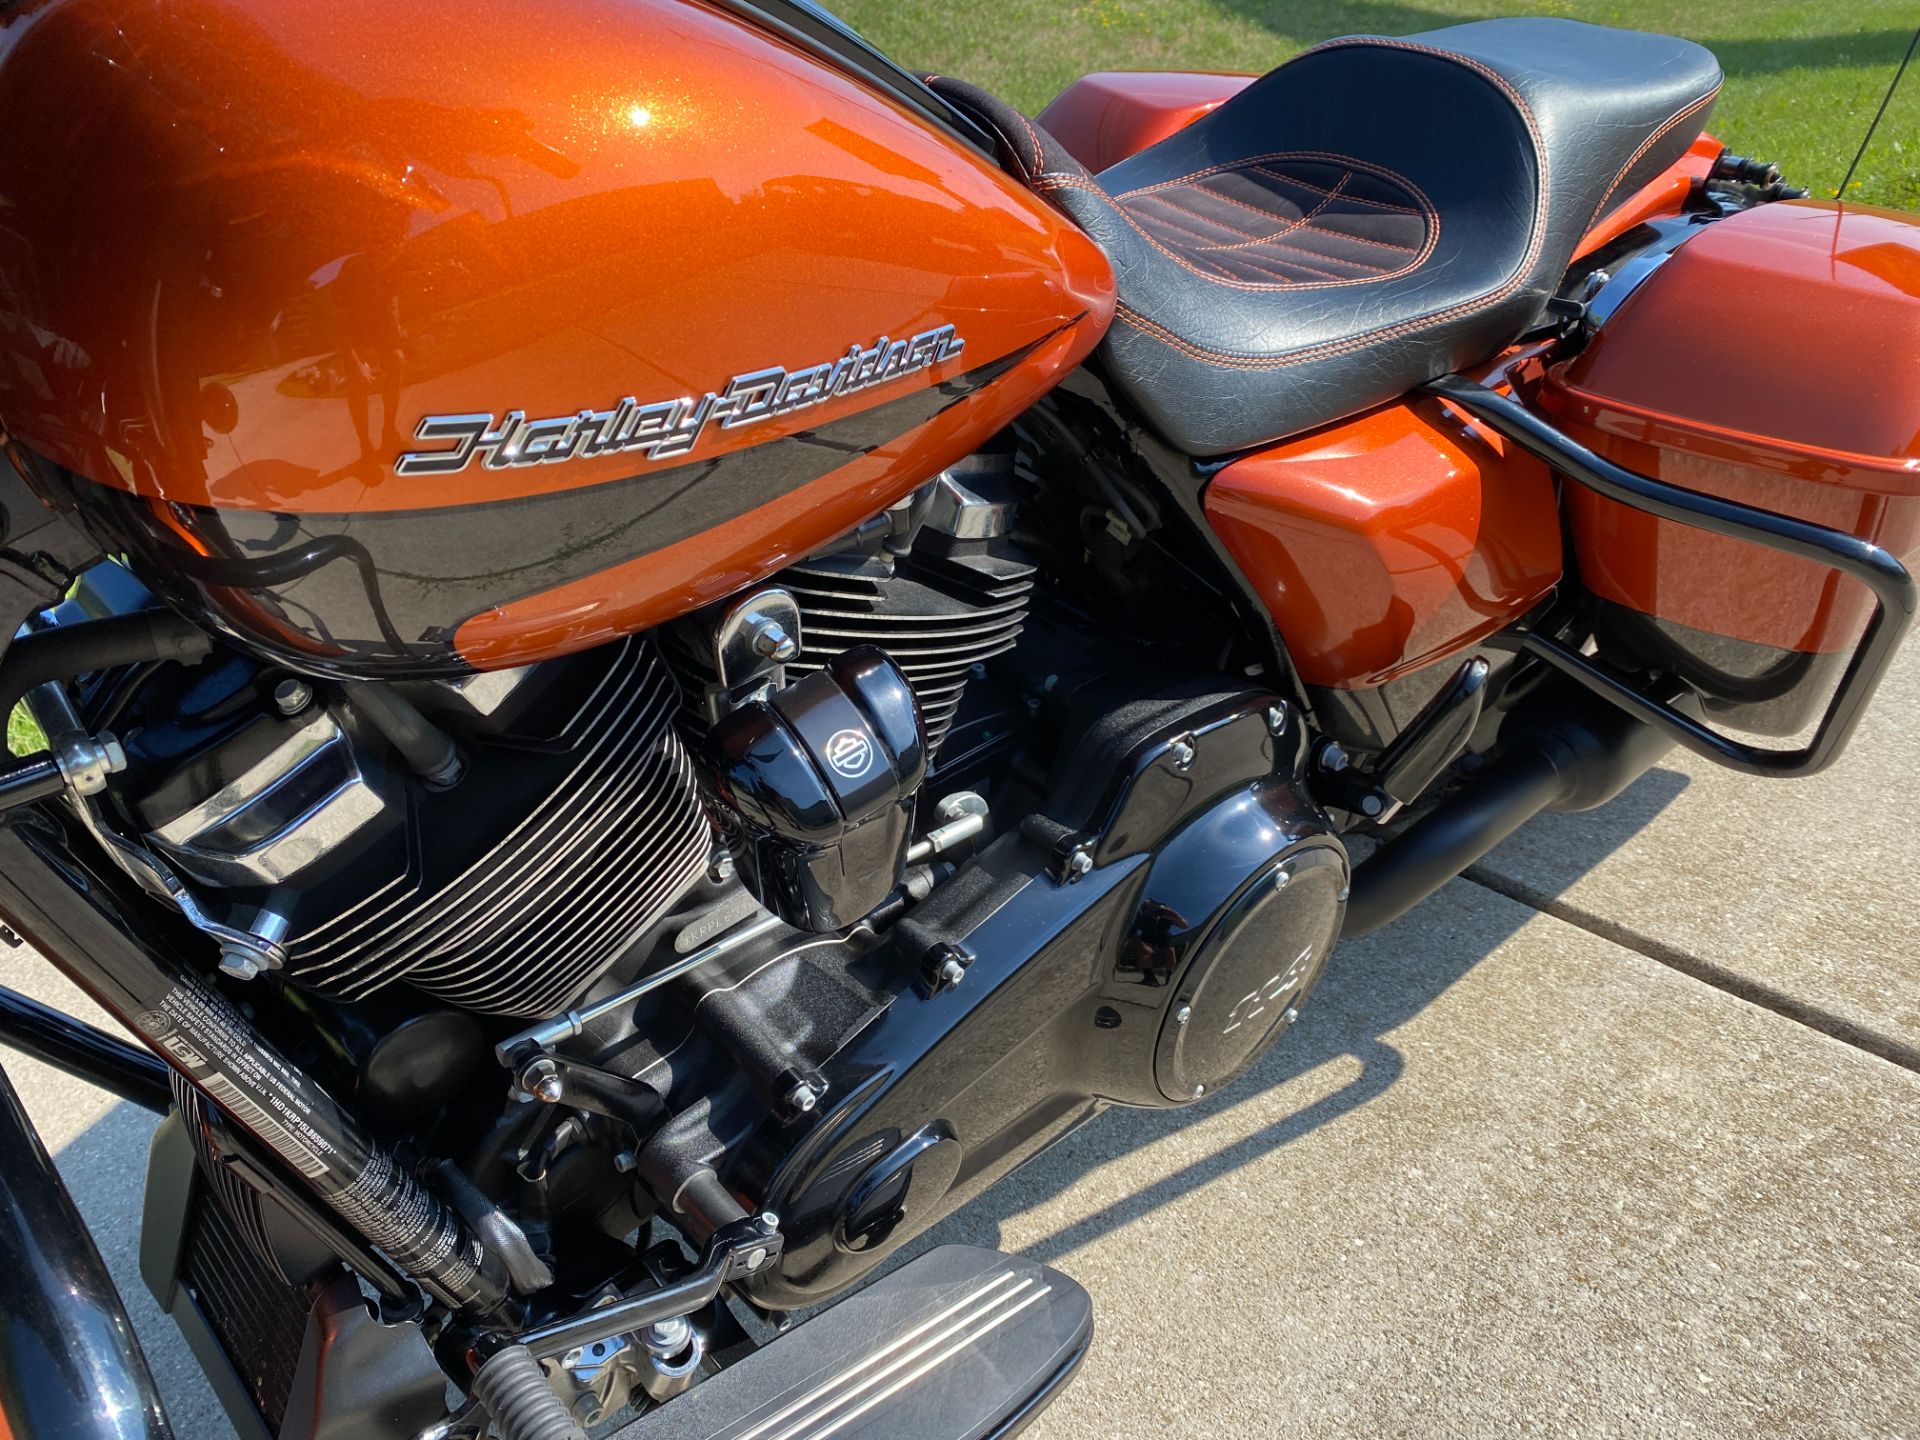 2020 Harley-Davidson Street Glide® Special in Big Bend, Wisconsin - Photo 8